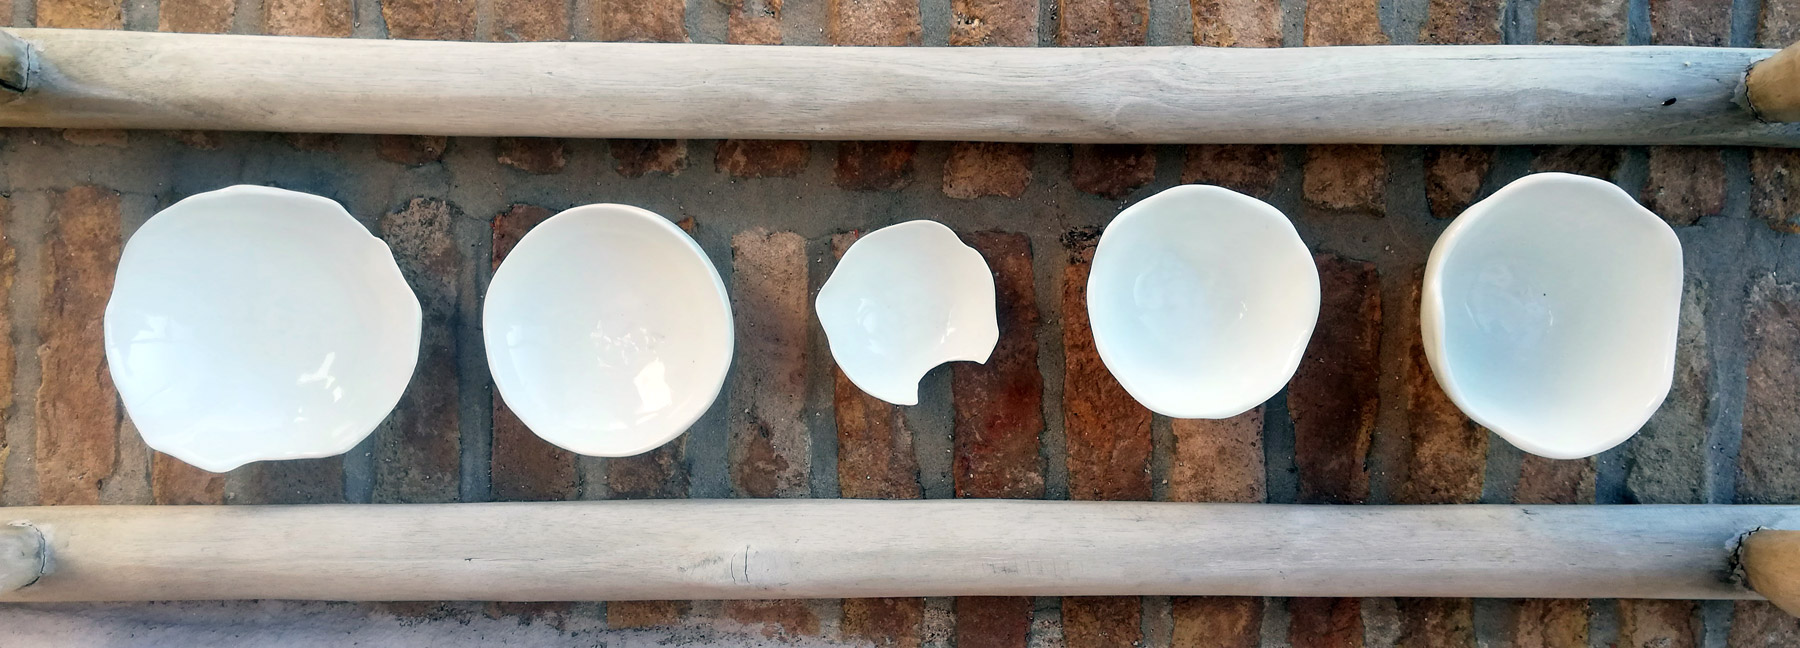 Five white ceramic bowls on stone background.